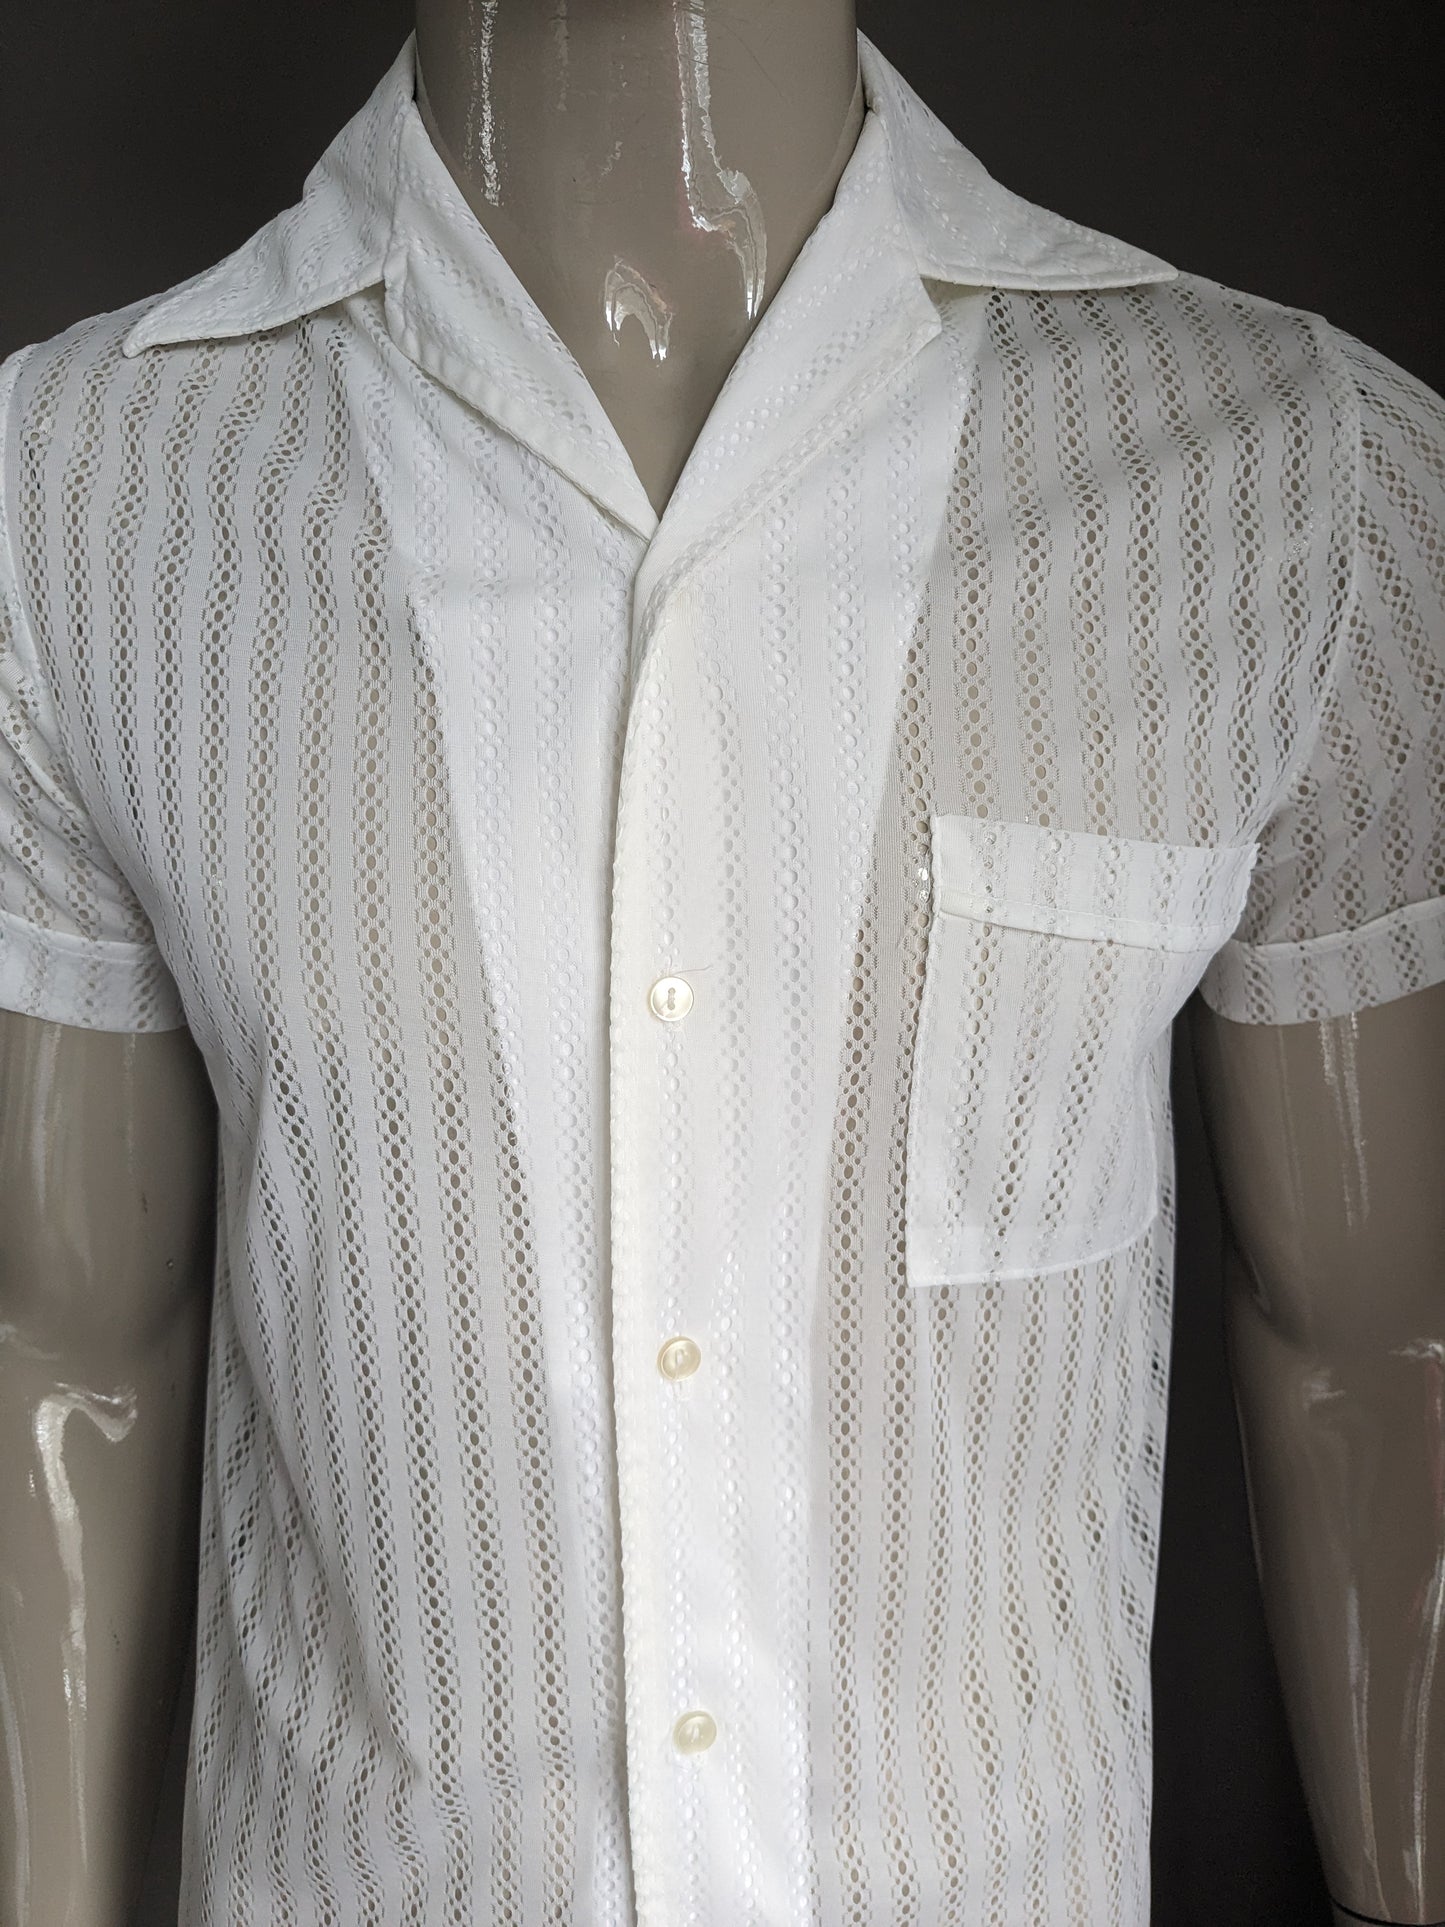 Camisa Vintage de los 70 manga corta. Motivo blanco transparente /translúcido. Talla M.